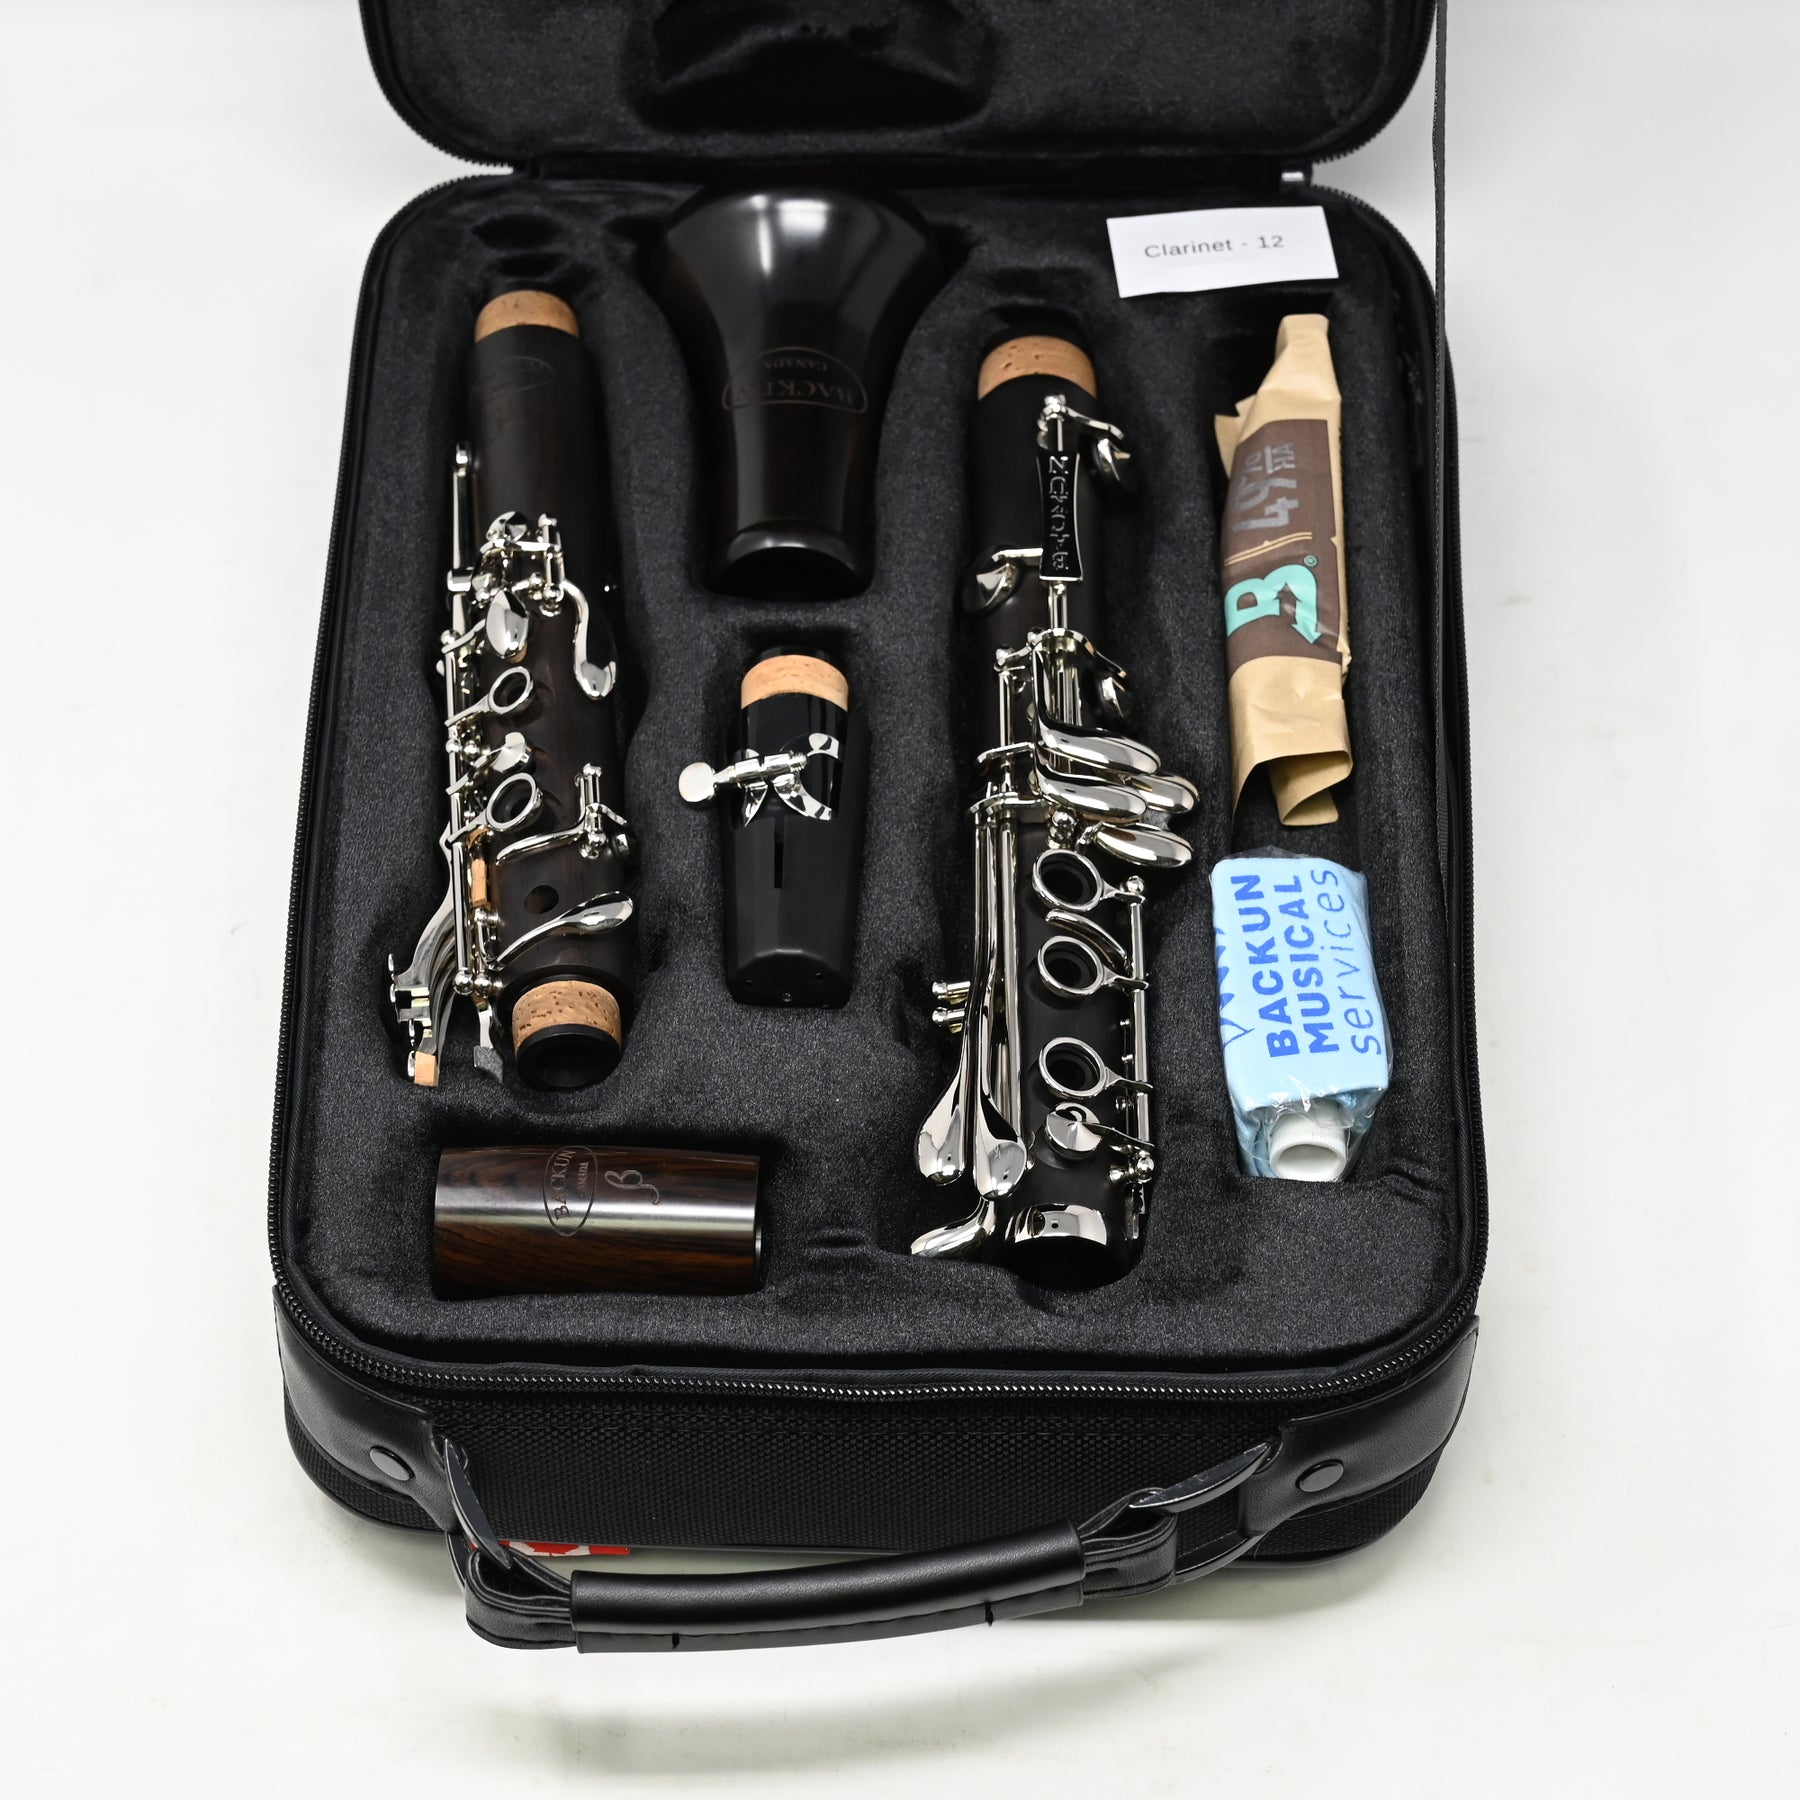 Demo Beta Bb Clarinet, Grenadilla with Nickel Keys (CL. 12)